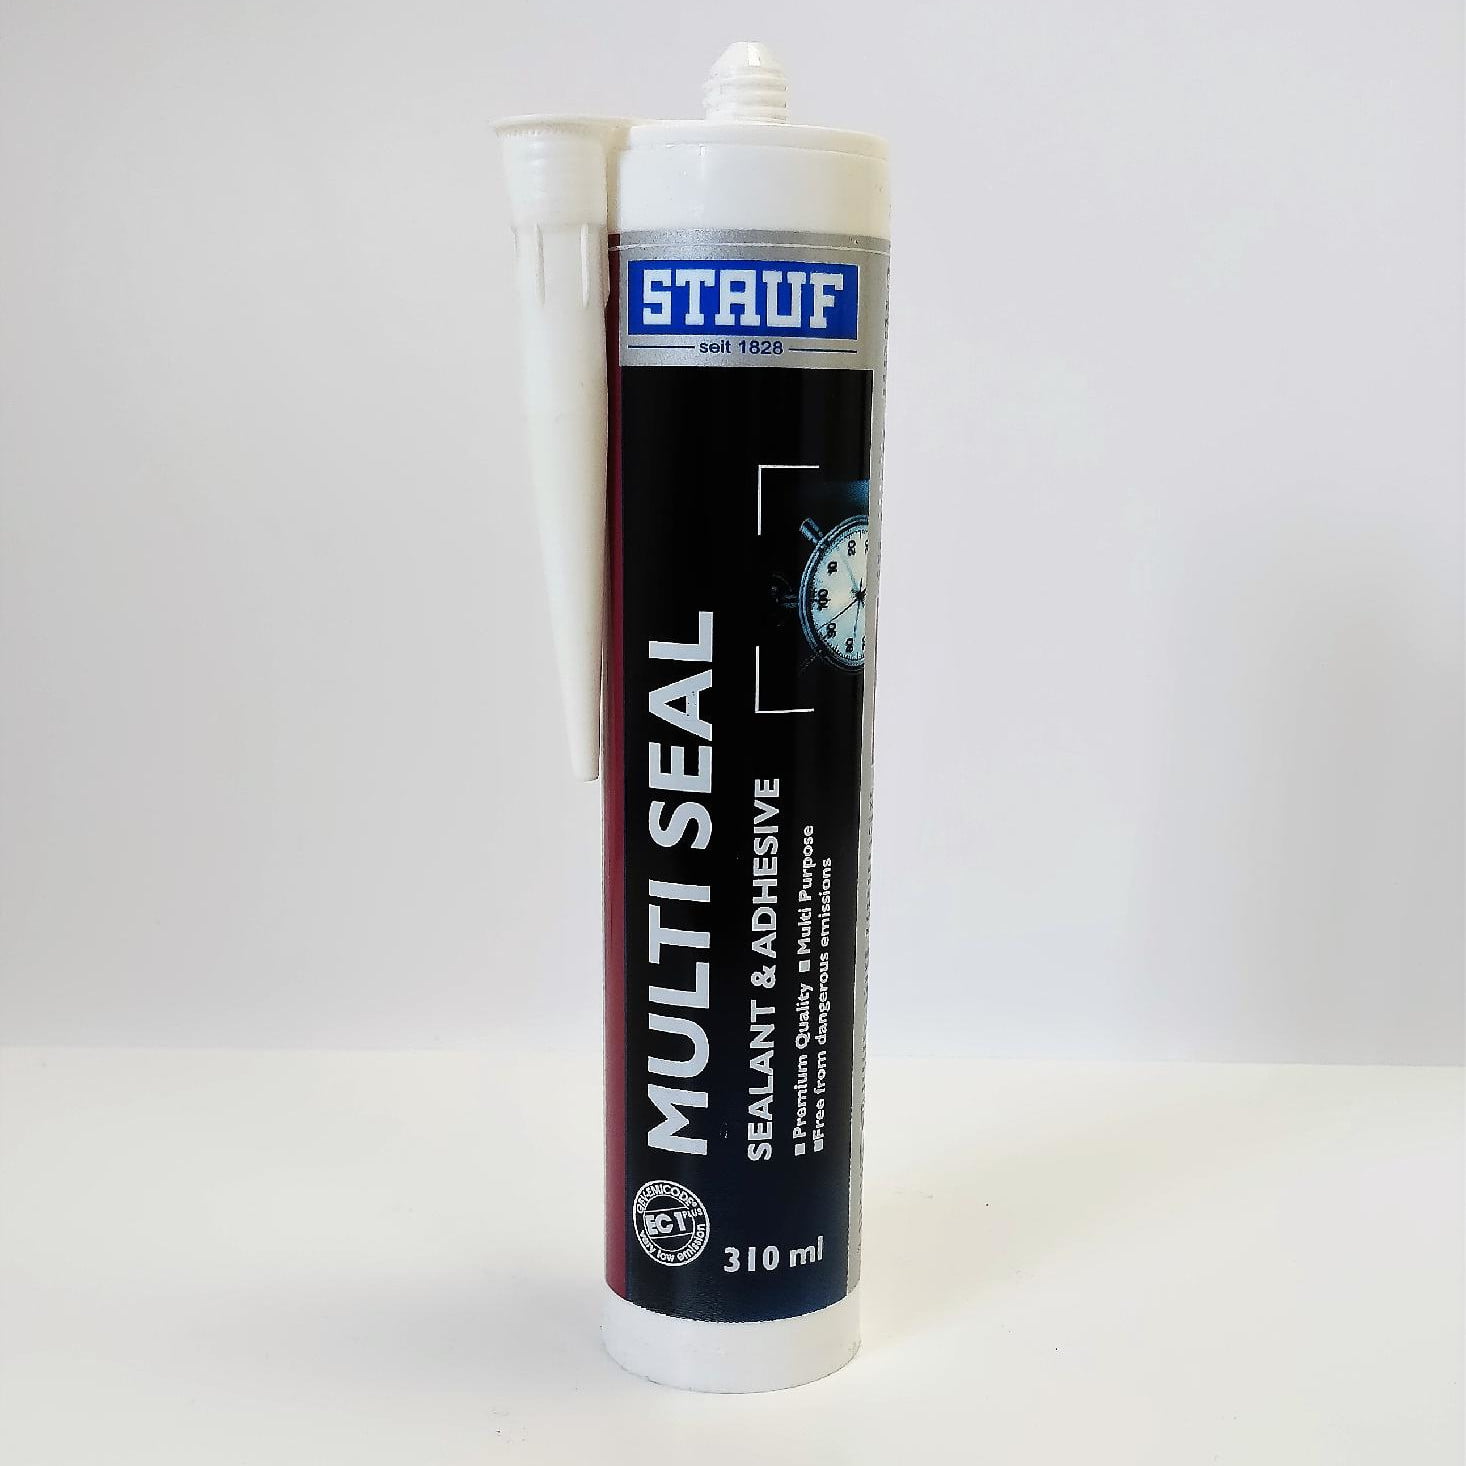 Stauf Multi Seal - Universal Adhesive & Sealant 310ml